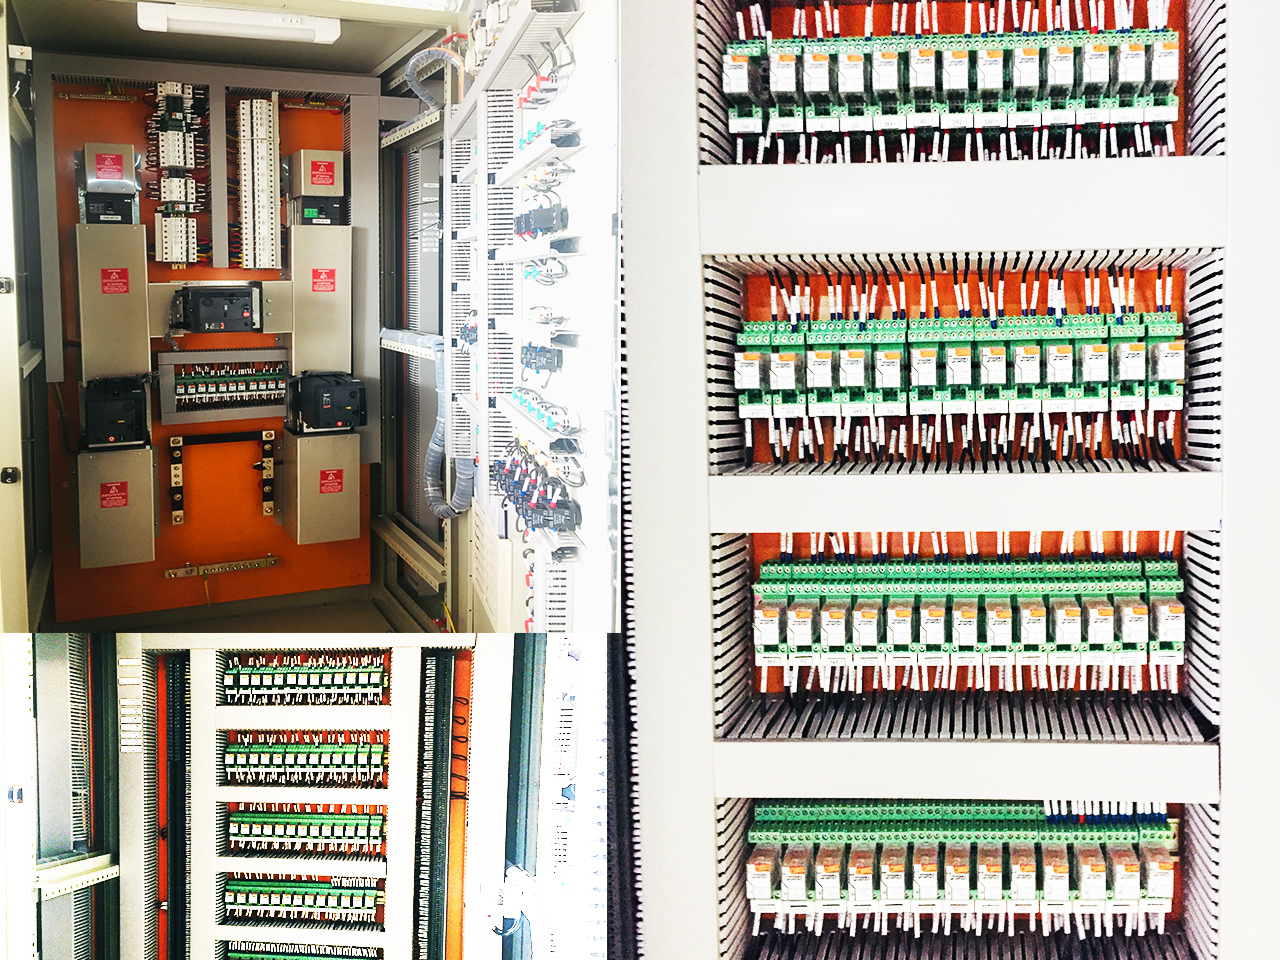 Control panel relays